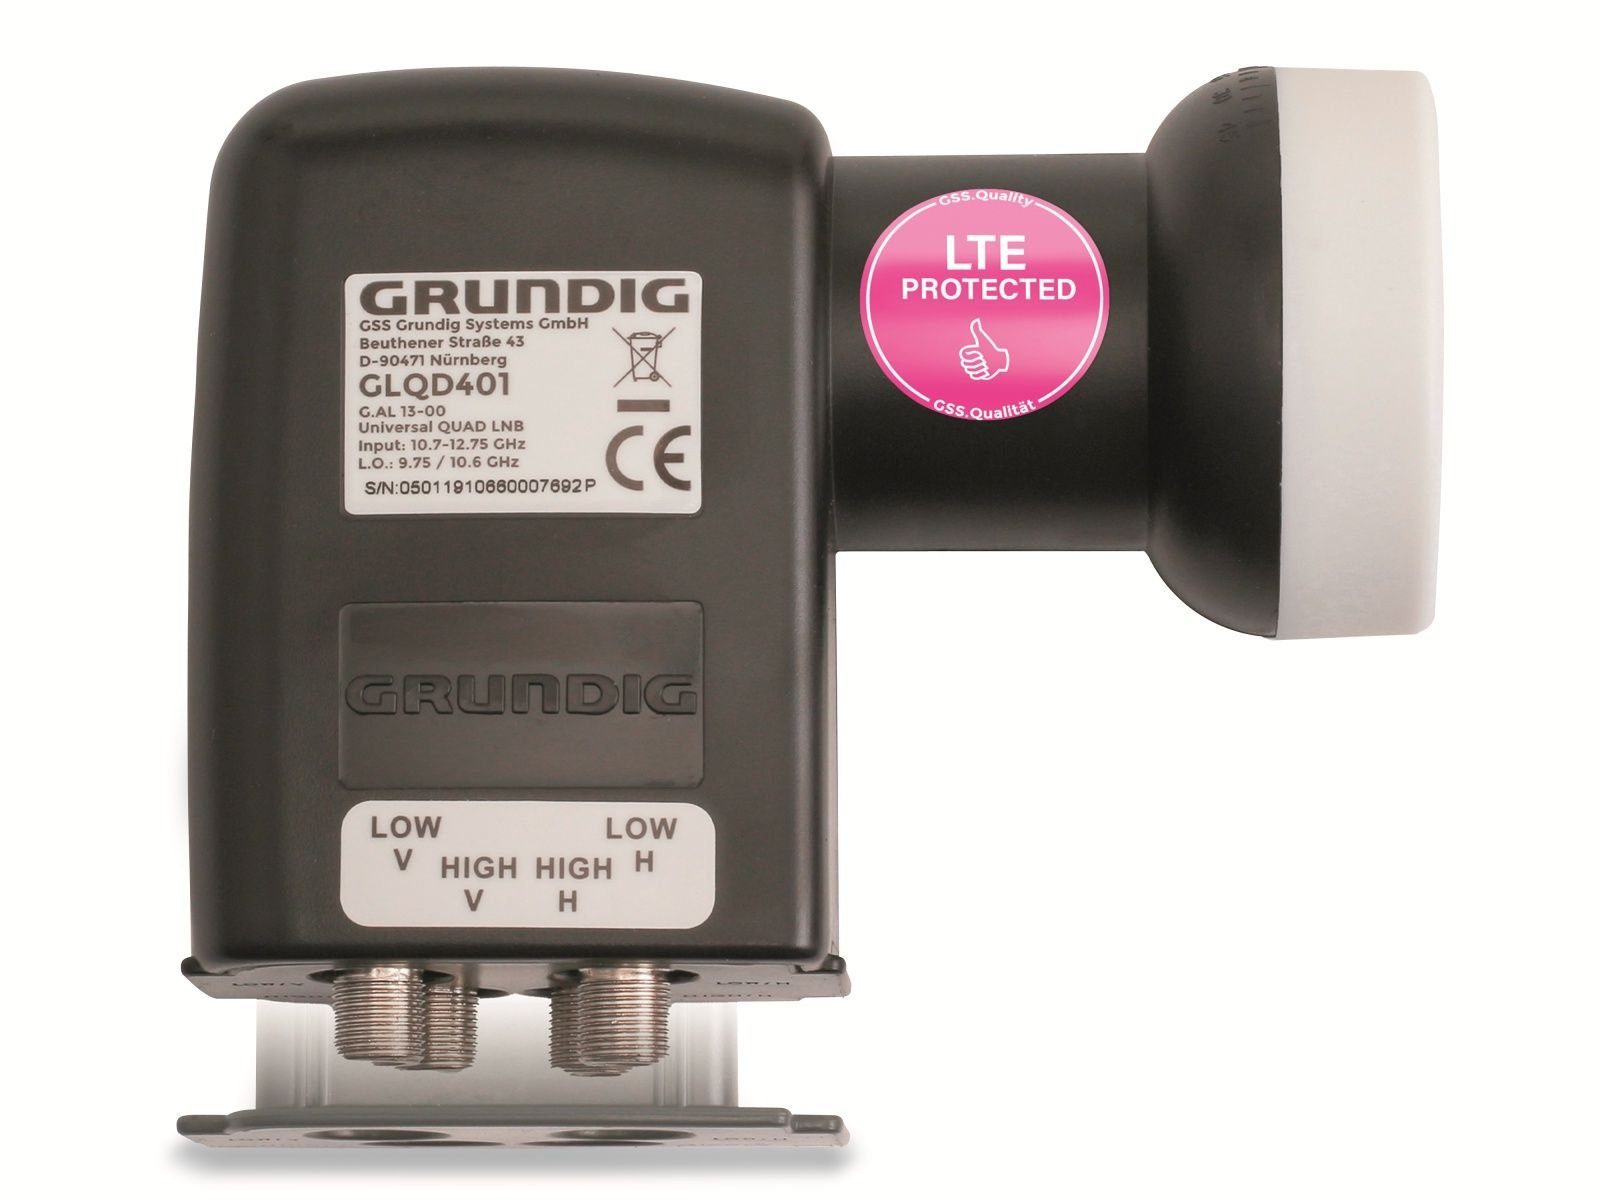 GRUNDIG Quad-LNB GLQD401 Universal-Quad-LNB Grundig